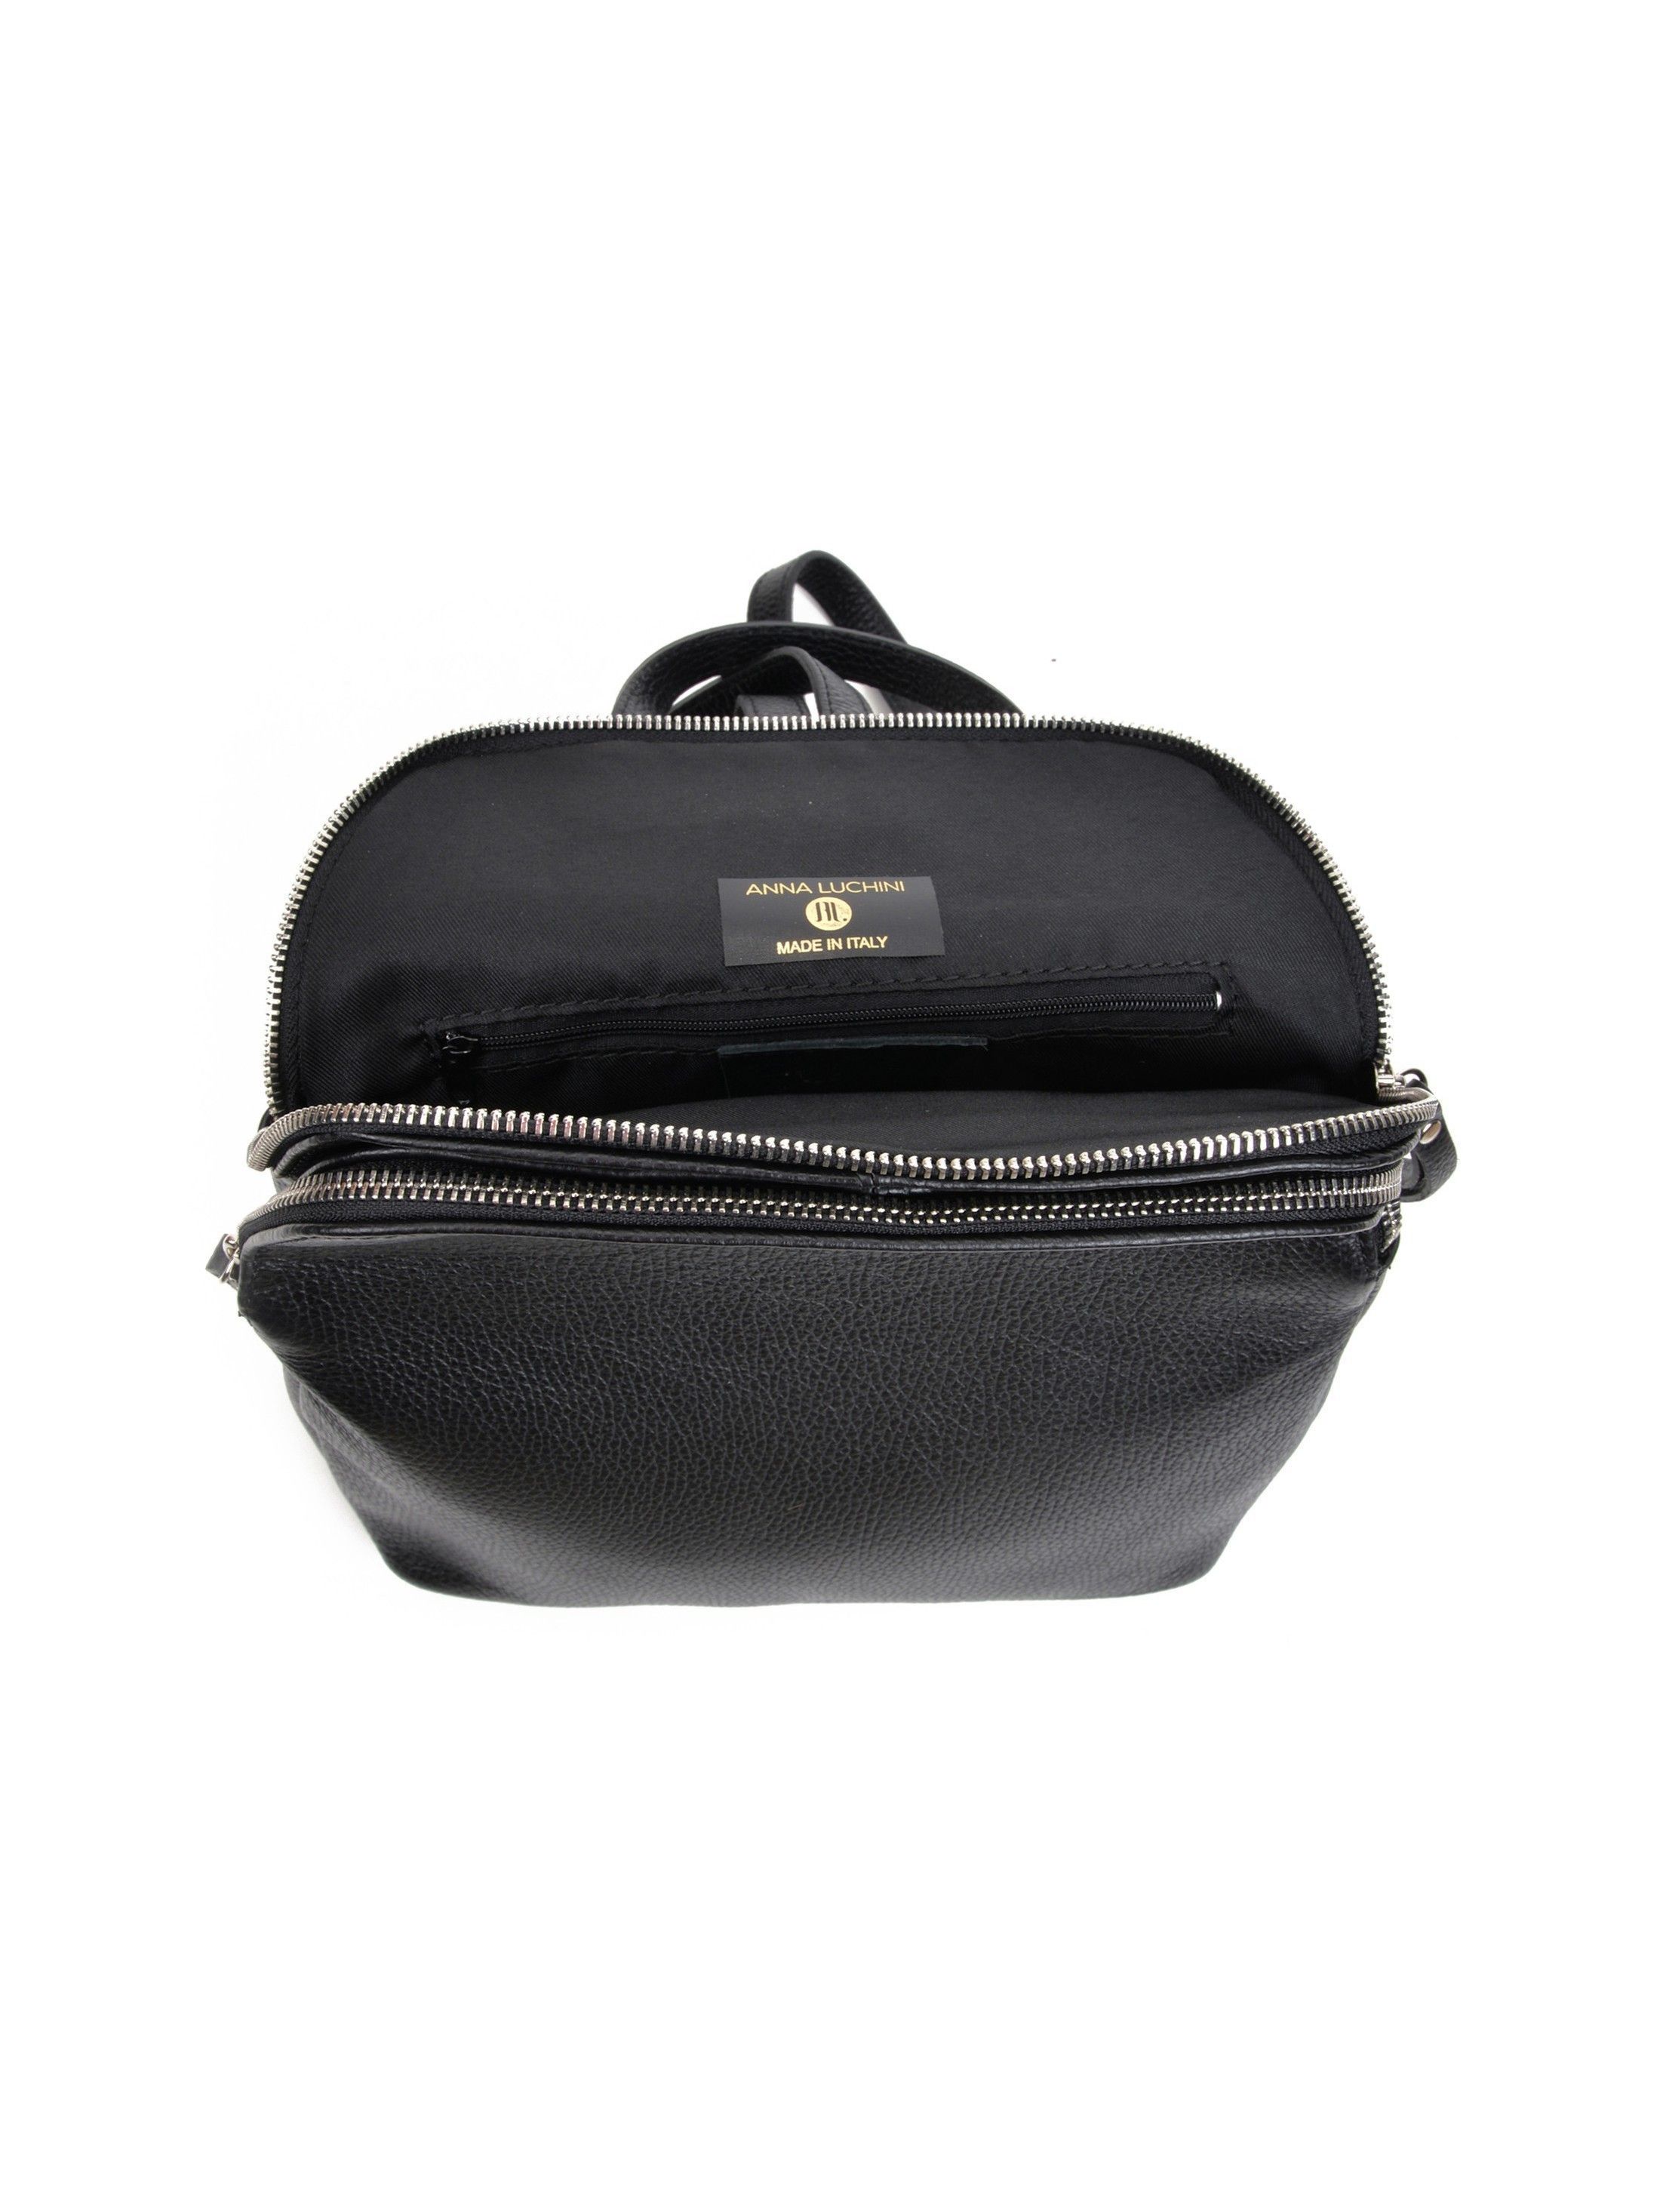 Backpack
100% cow leather
Double top zip compartments
Interior pocket
Back zip pocket
Dimensions (L): 30x30x14.5 cm
Handle: 25 cm
Shoulder strap: 2x90 cm